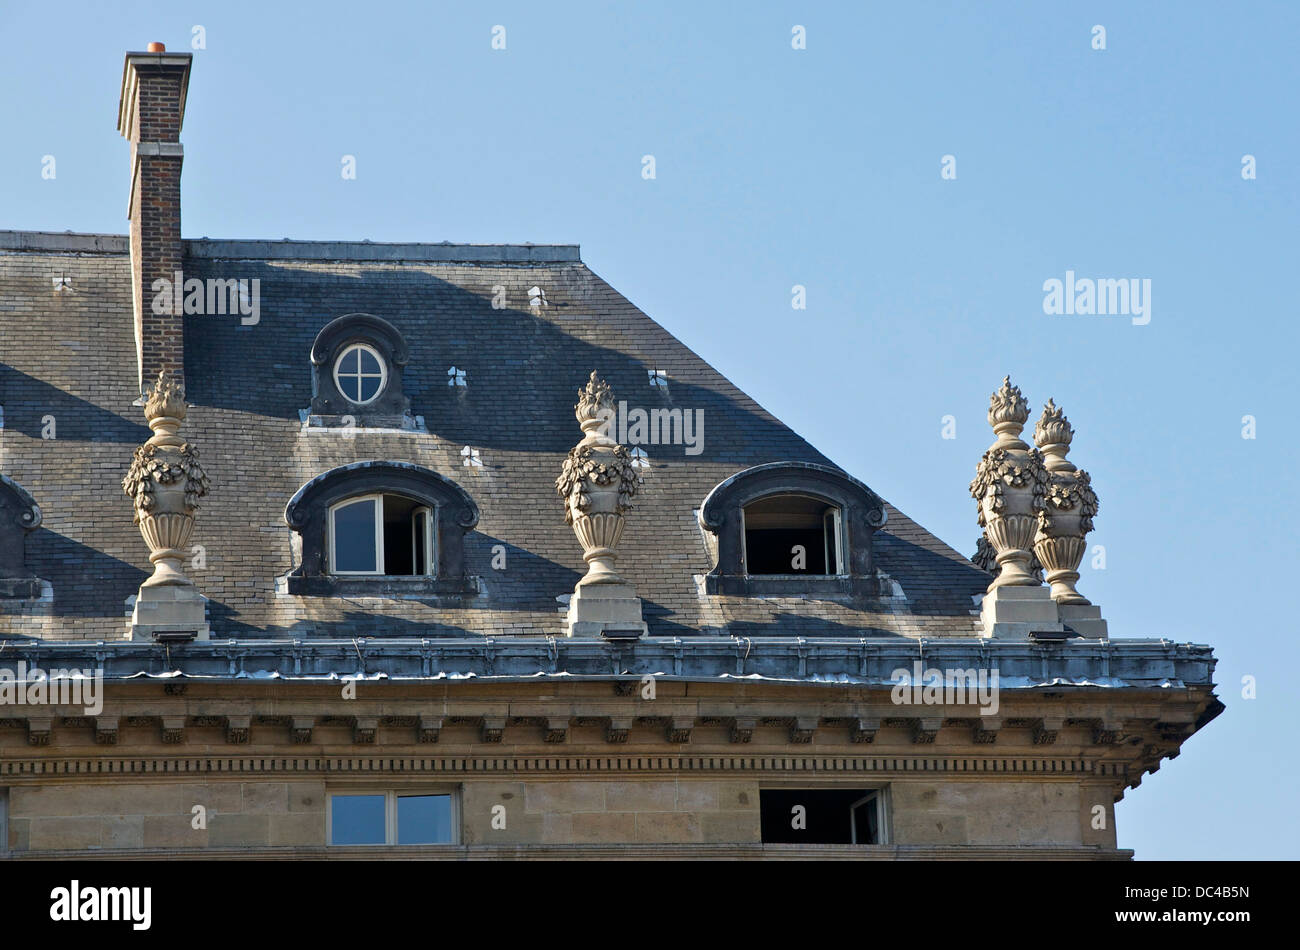 Detalles de elementos arquitectónicos del siglo XVII en Francia (oeil de beouf ventana, mansards, potes-à-feu...), techo de la ins Foto de stock